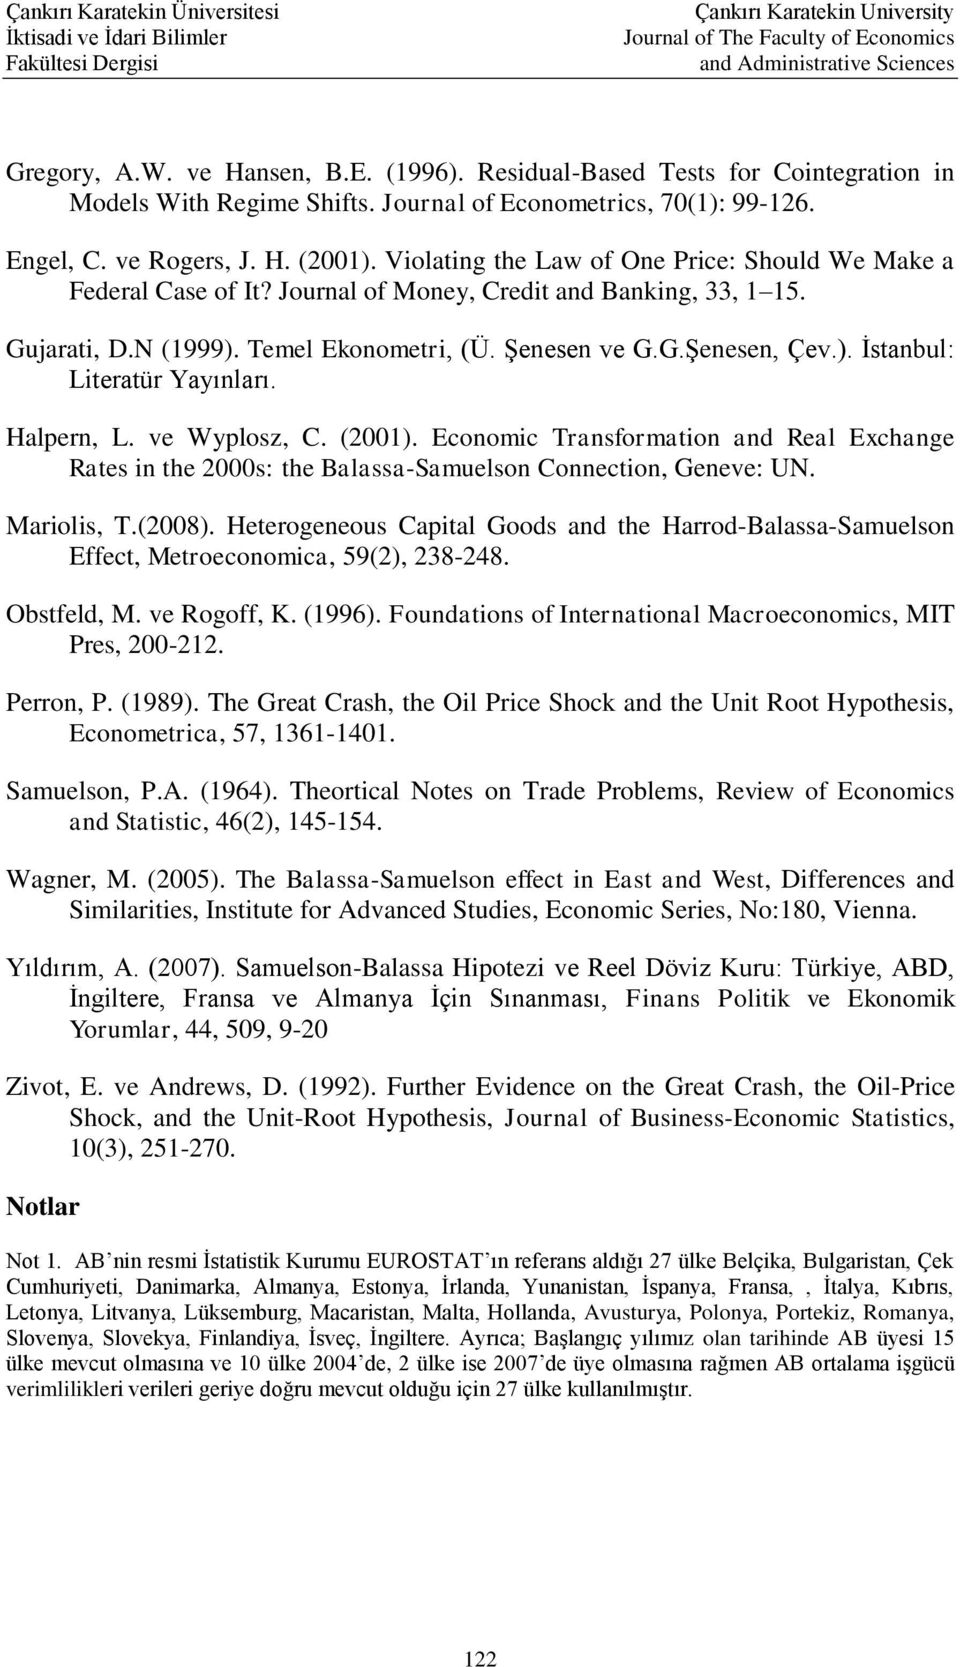 Halpern, L. ve Wyplosz, C. (2001). Economic Transformation and Real Exchange Rates in the 2000s: the Balassa-Samuelson Connection, Geneve: UN. Mariolis, T.(2008).